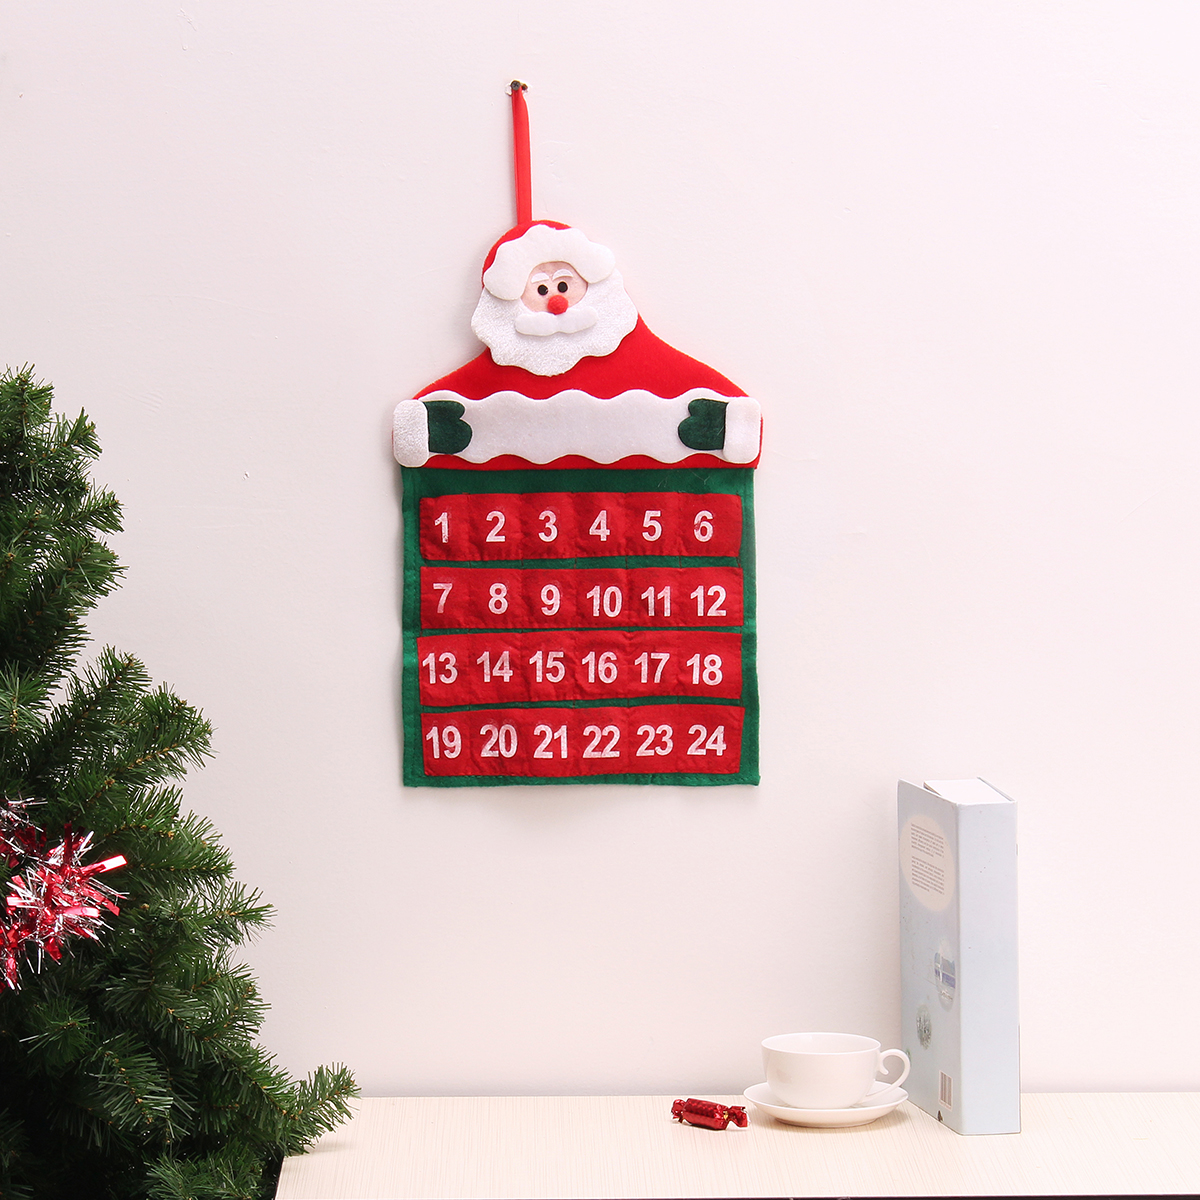 Felt-Christmas-Advent-Wall-Hanging-Calendar-Pockets-Santa-Reindeer-Snowman-Decorations-1462546-6